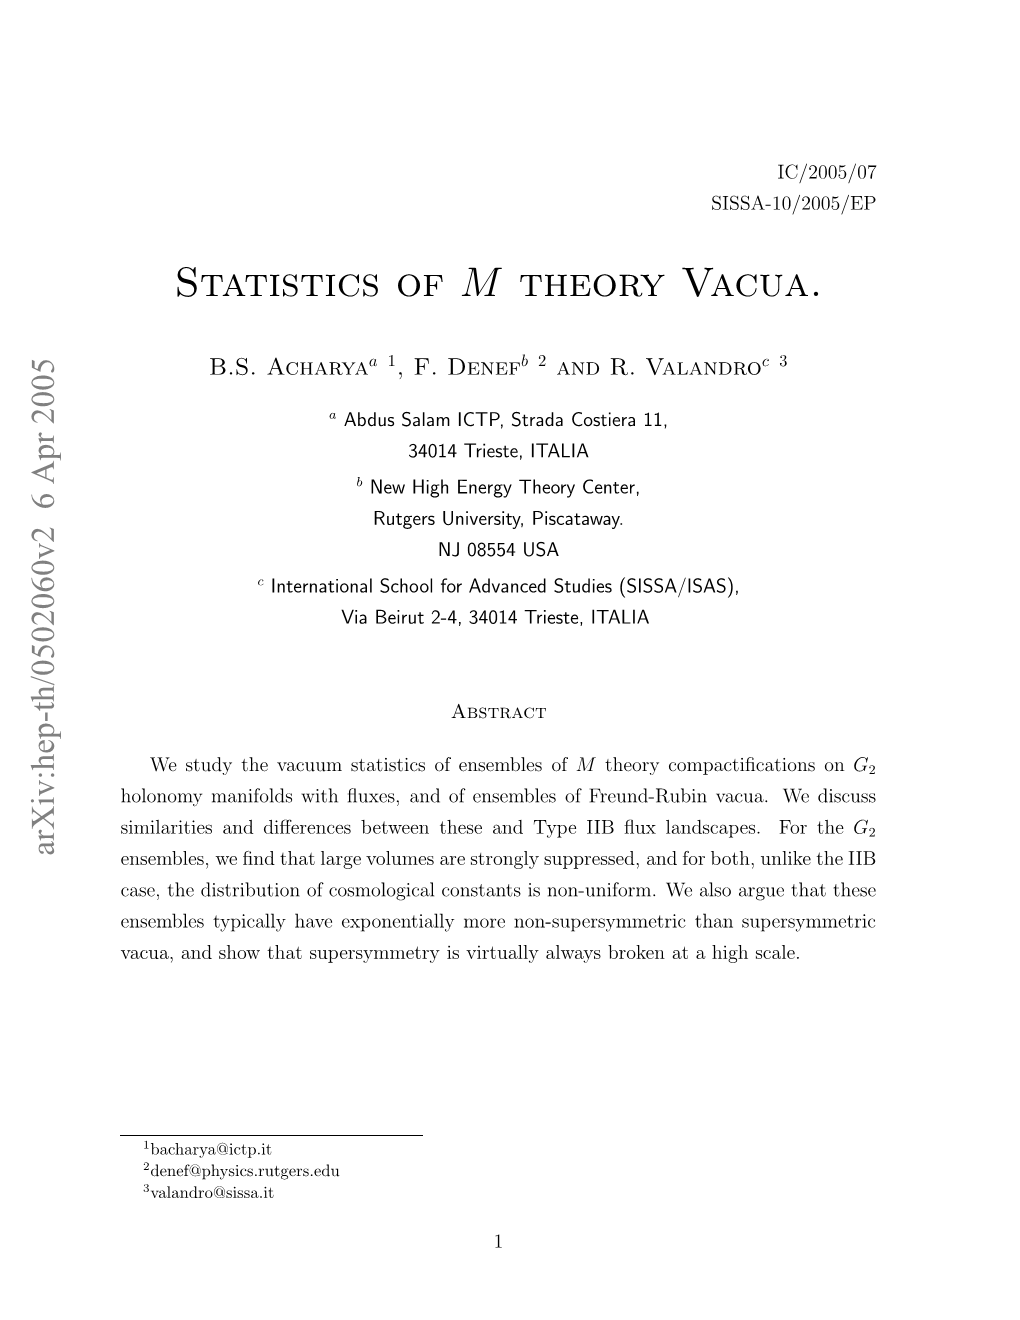 Statistics of M Theory Vacua